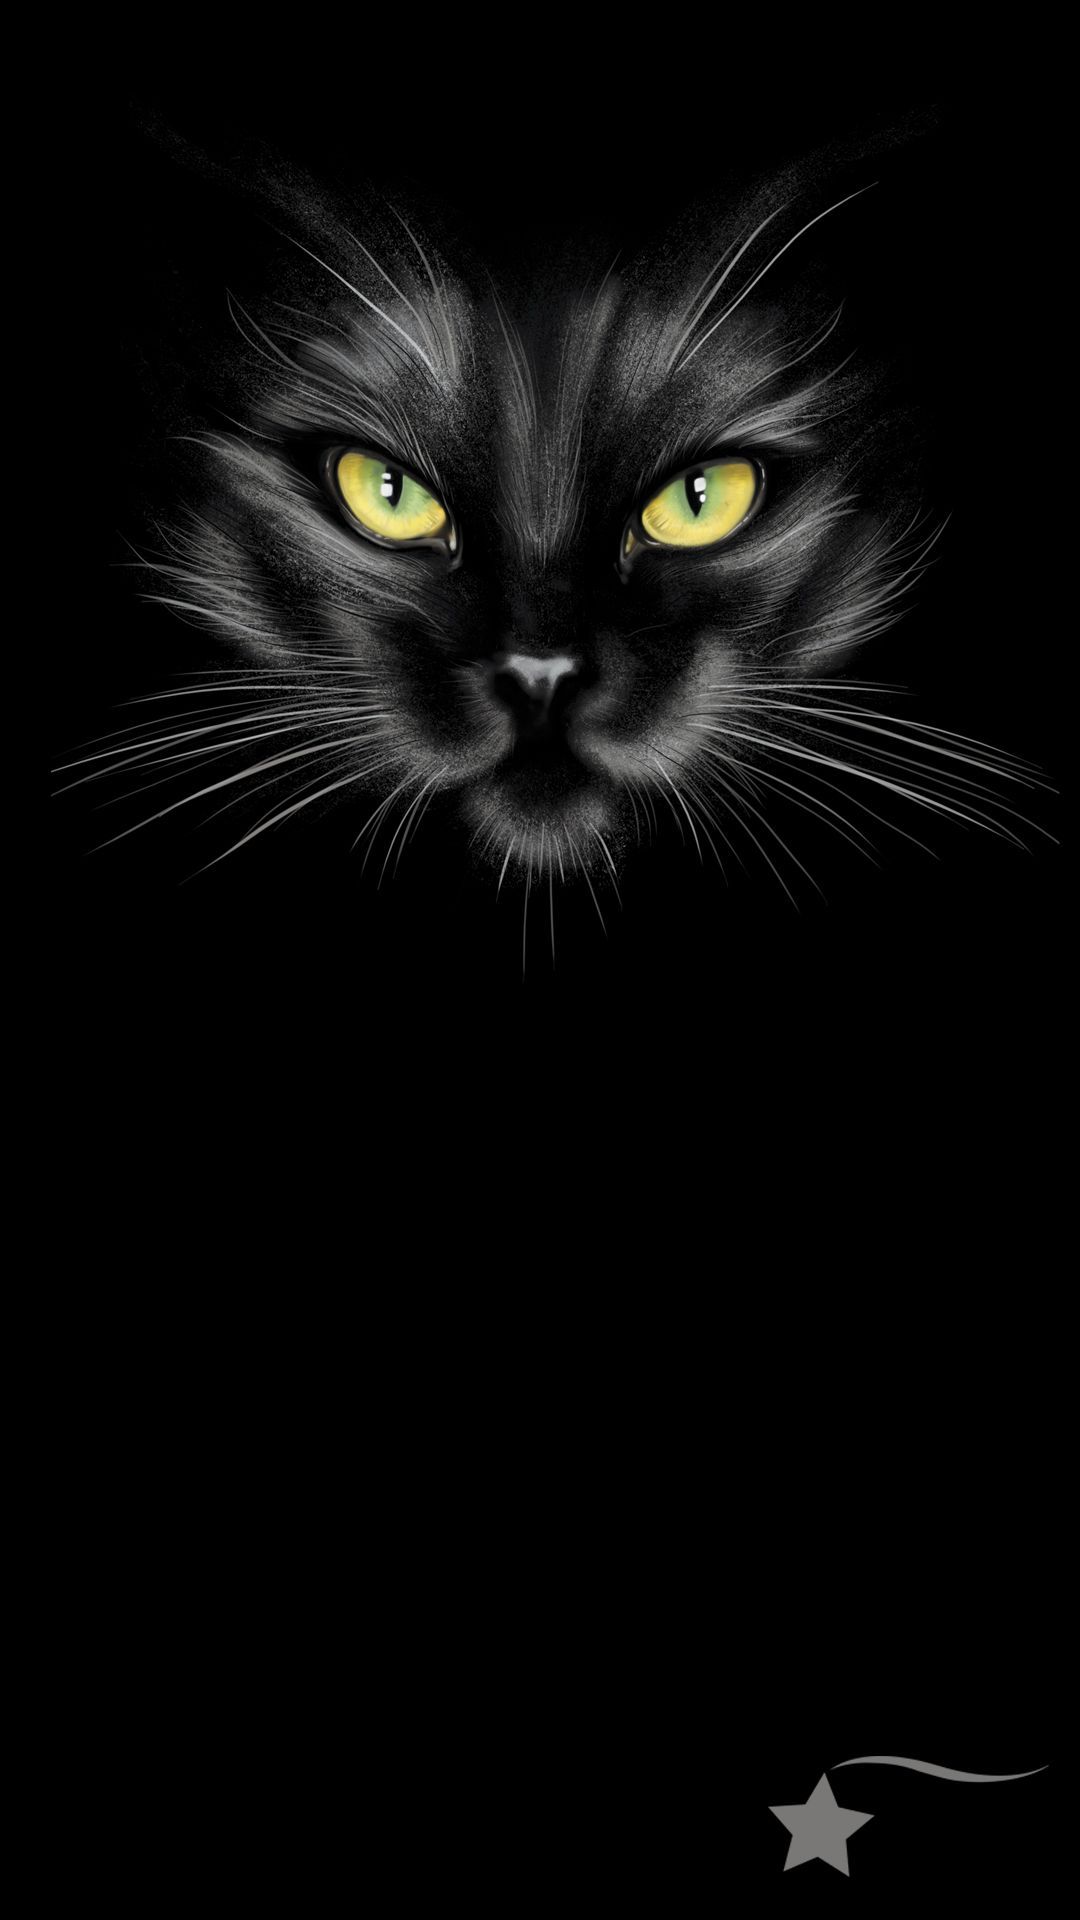 Destira Phone Wallpaper to match our Spooky Black Cat Halloween